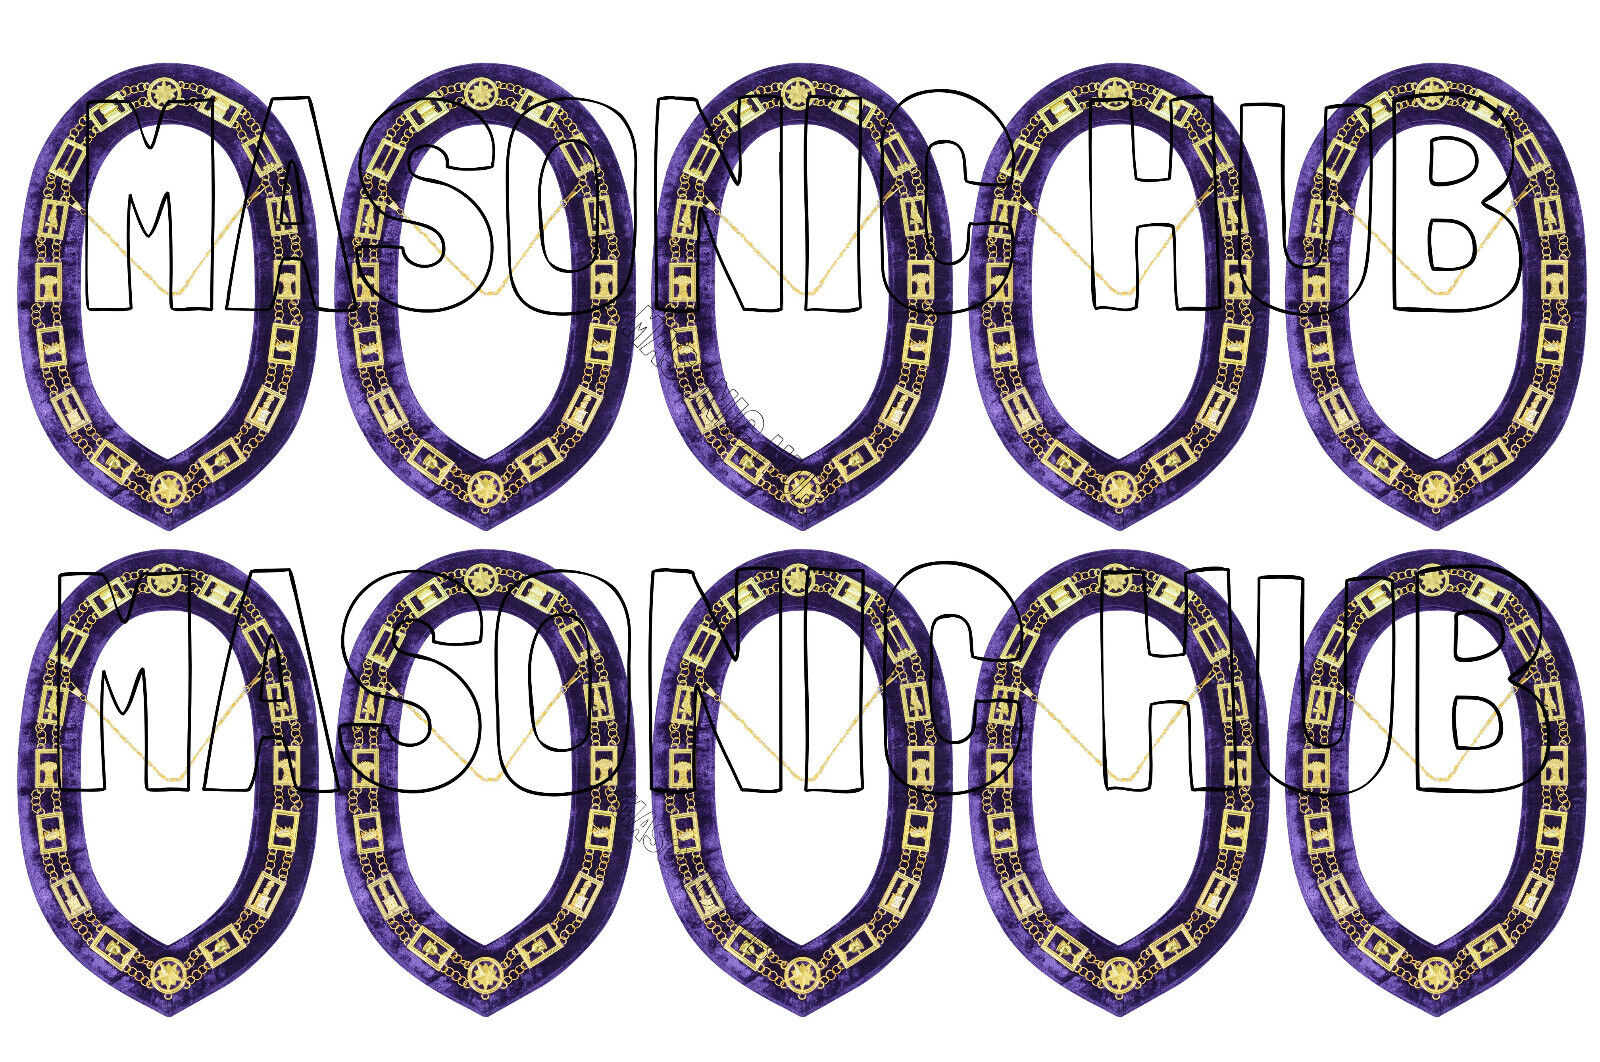 Masonic Regalia OES Order of Eastern Star Metal Chain Collar Lot of 10 Purple